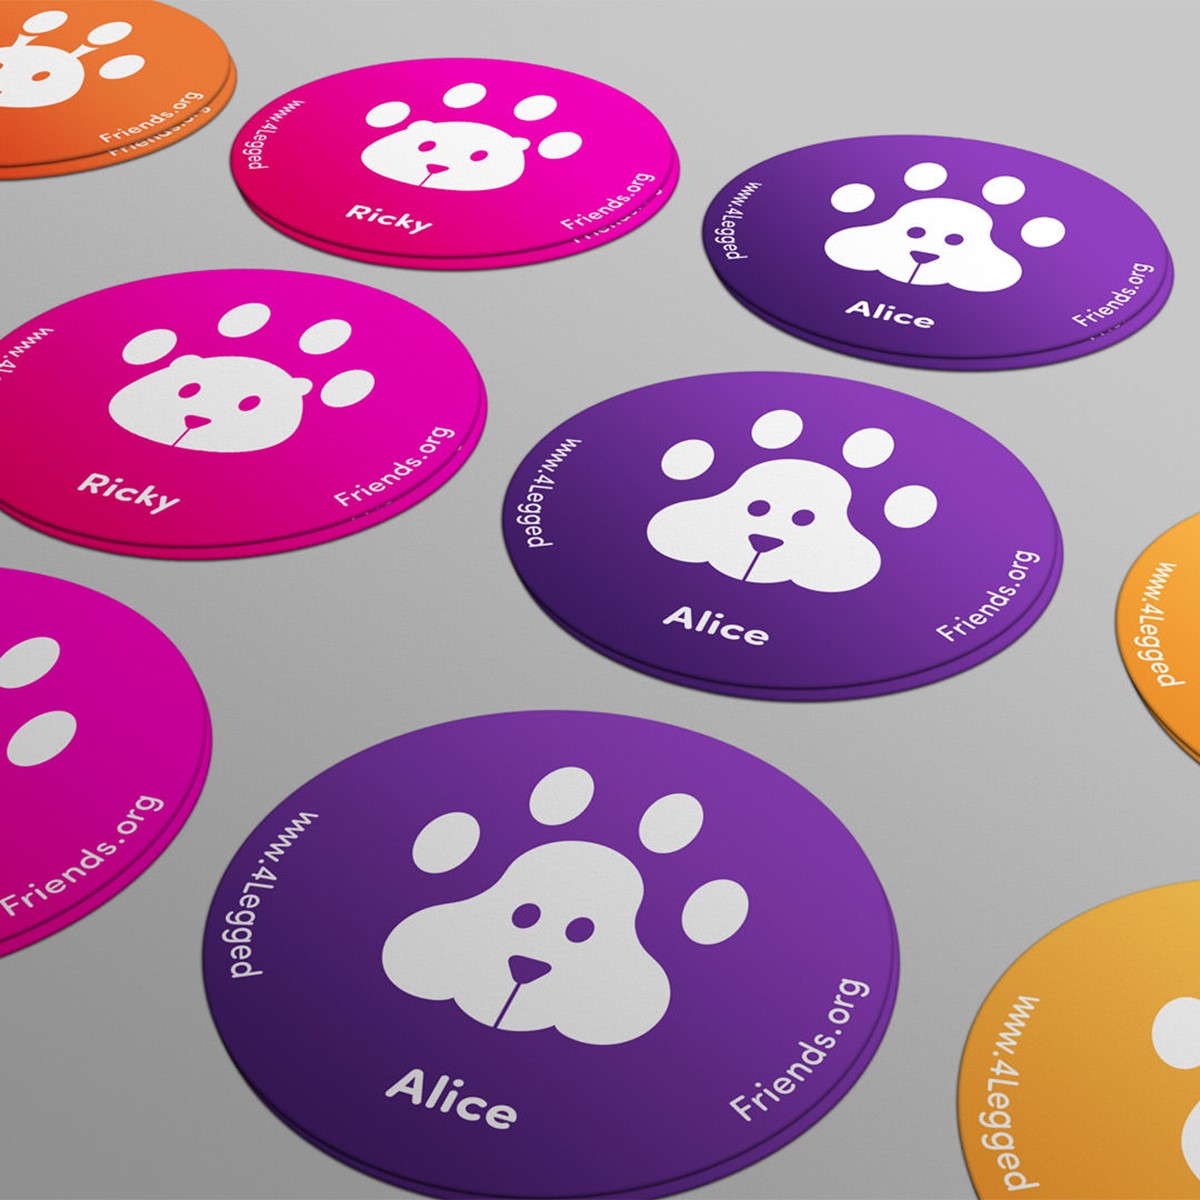 4 Legged Friends animal logo stickers mock-up. Identity design by Superfried.